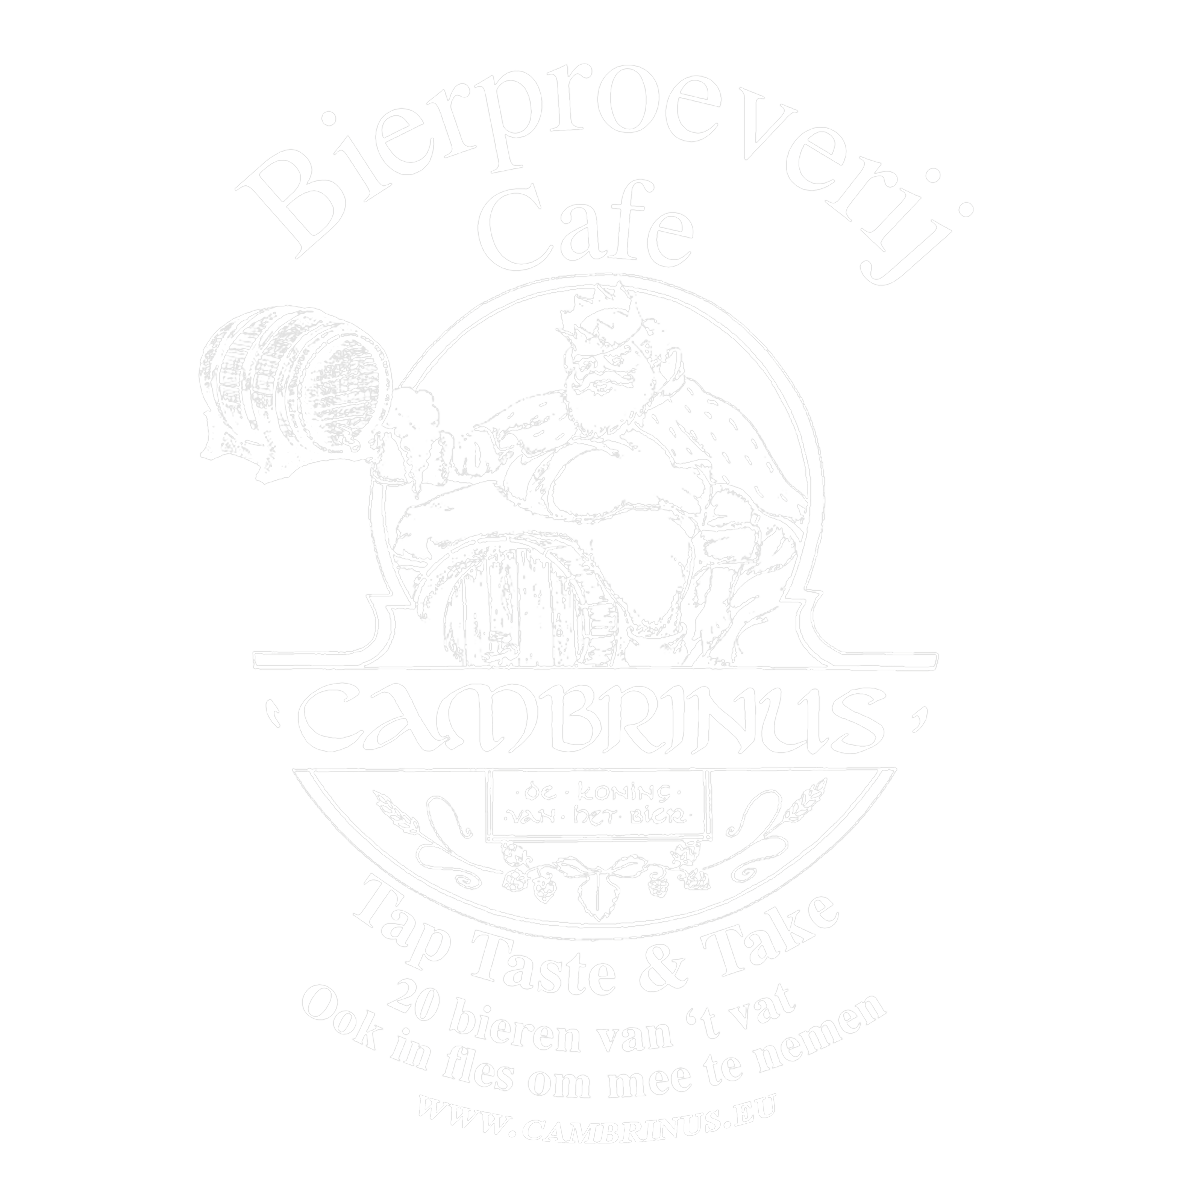 Cafe cambrinus logo white